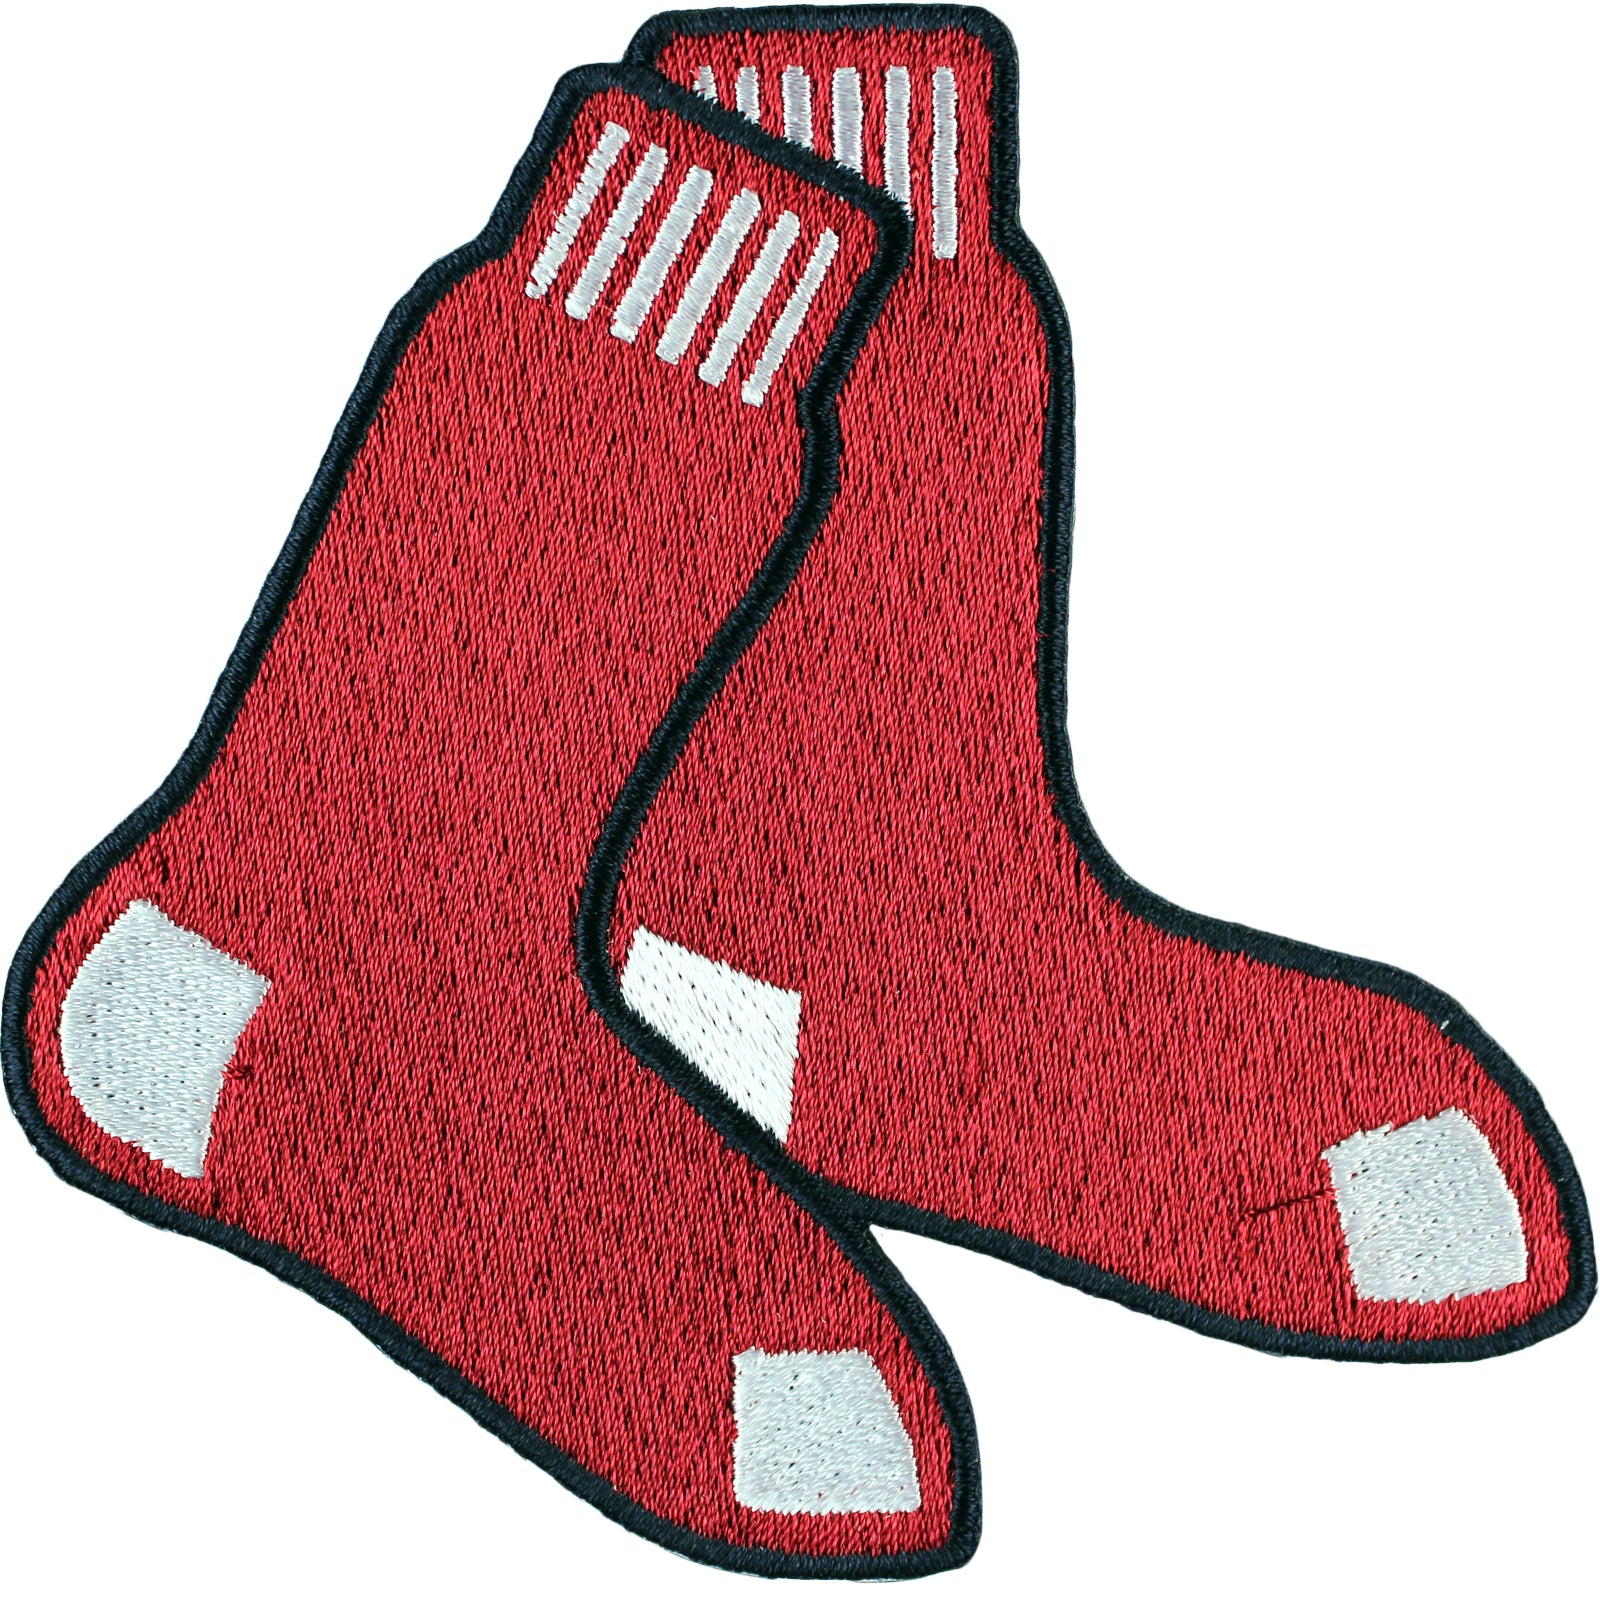 SOCKS Hoodie Chicago White Sox Retro Jersey Logo Parody 